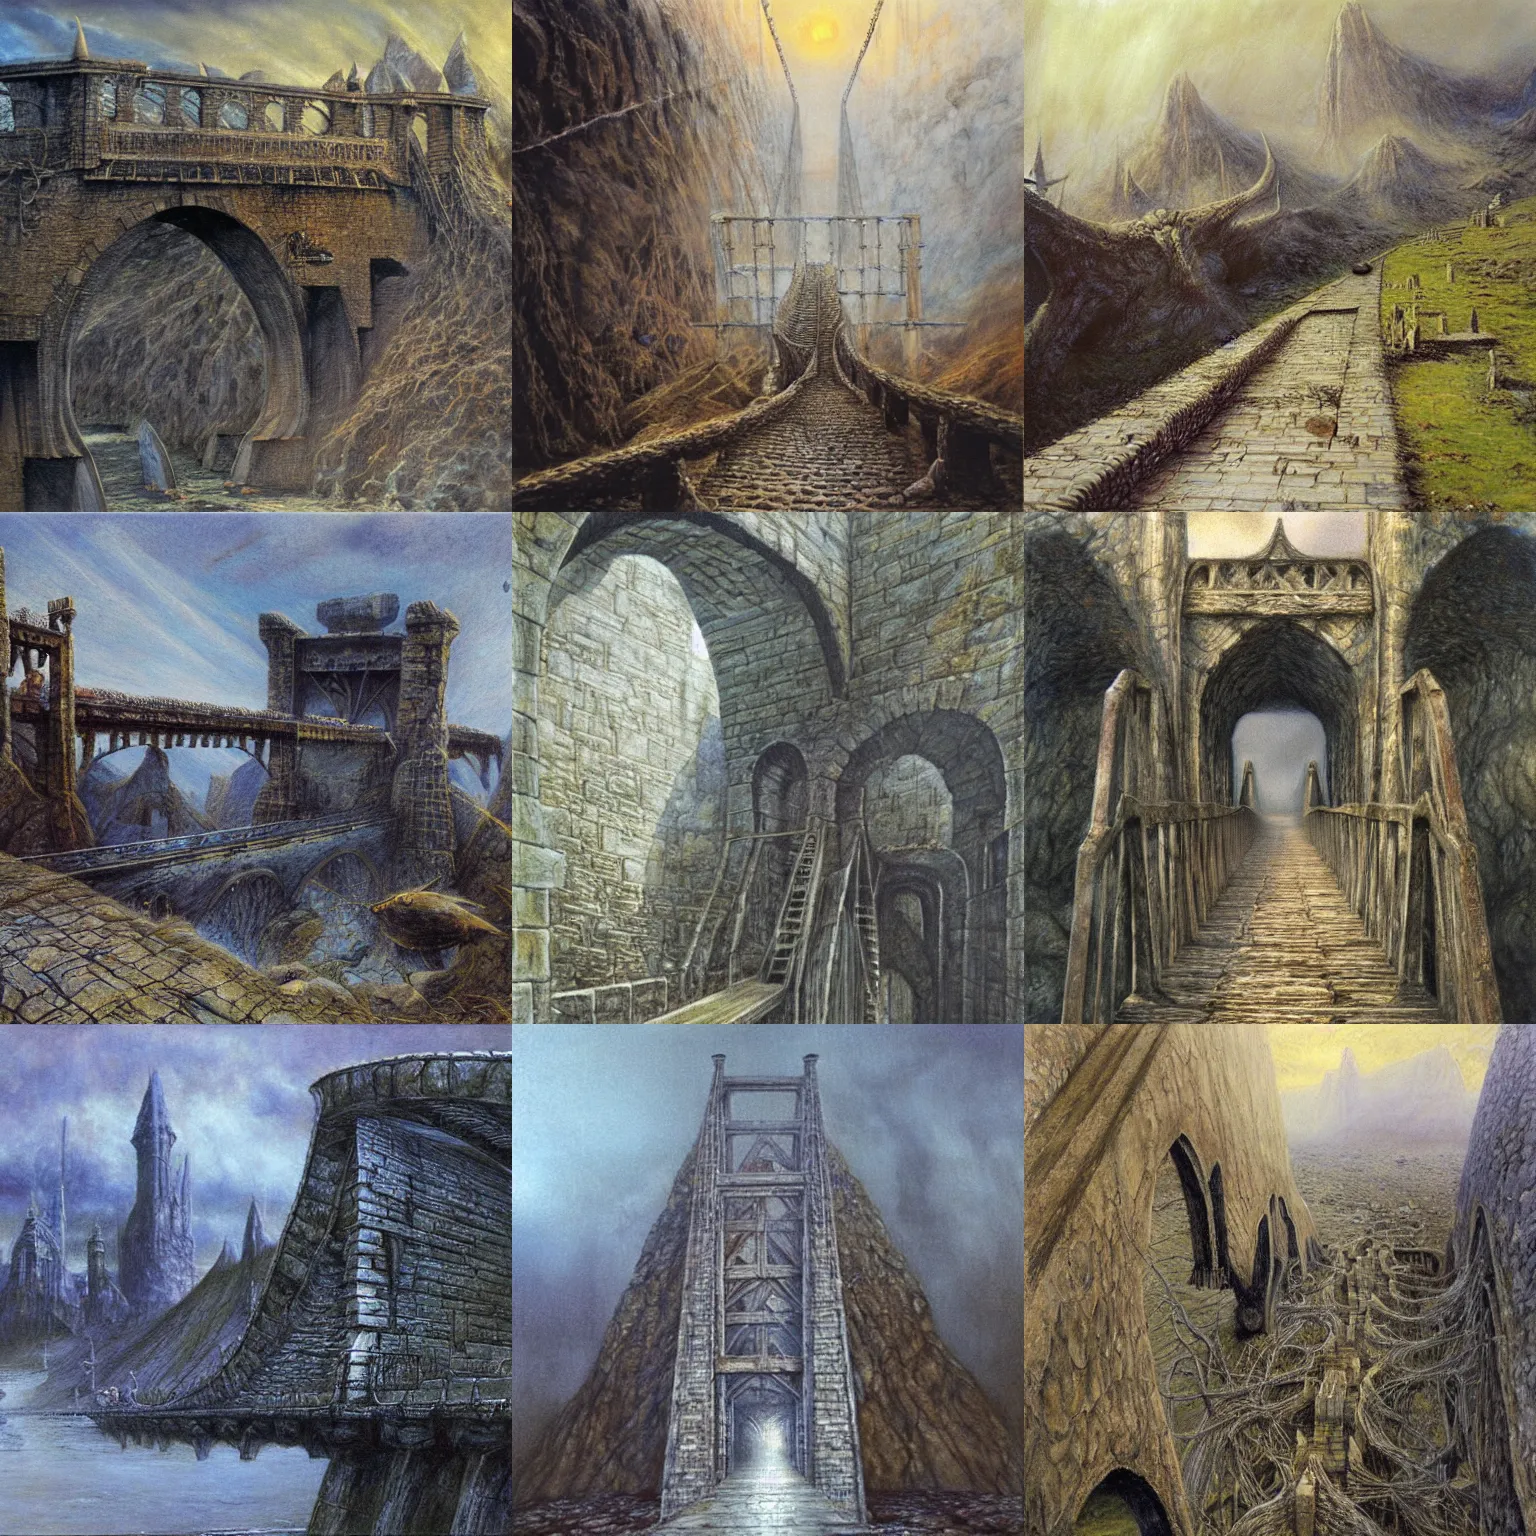 Khazad-dûm - Finished Projects - Blender Artists Community